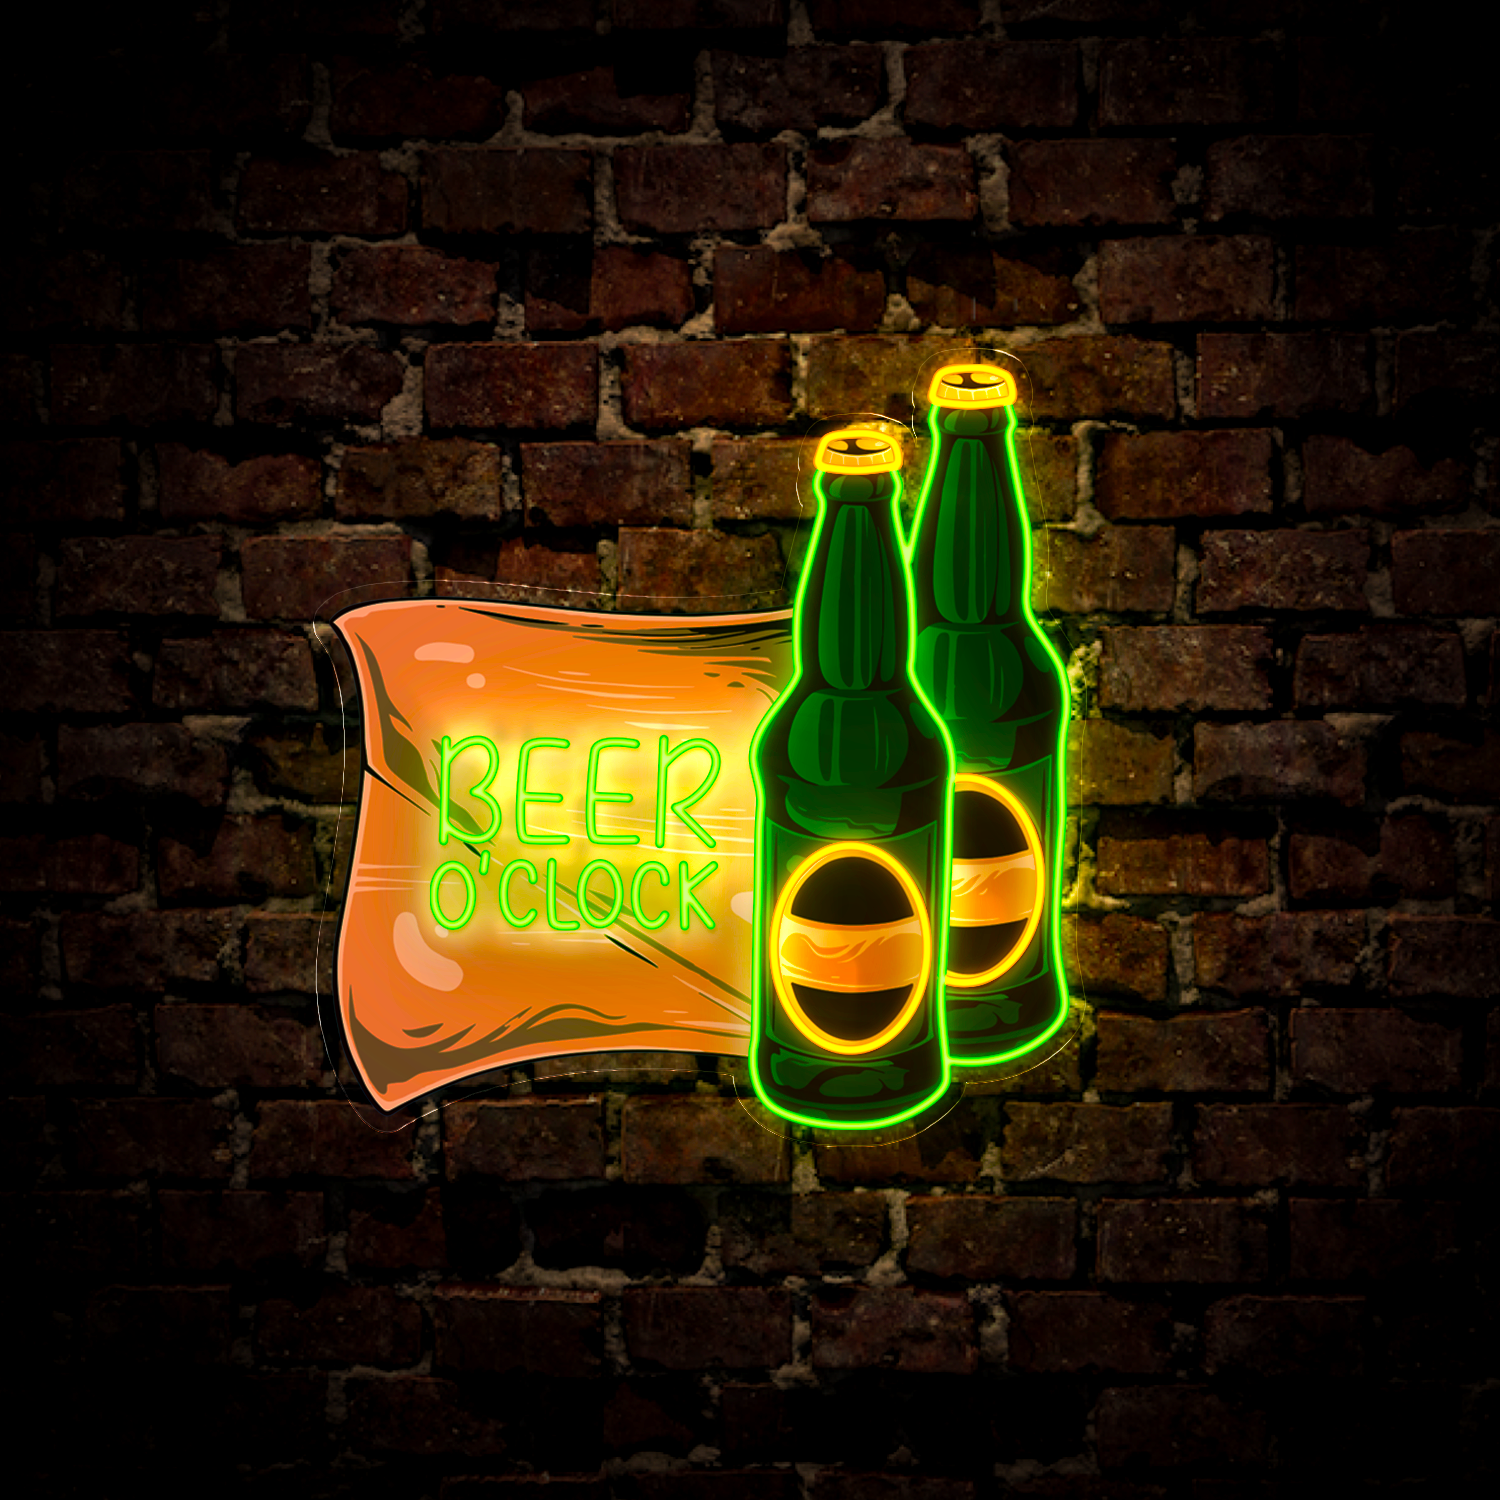 Beer O'clock Artwork Neon Sign